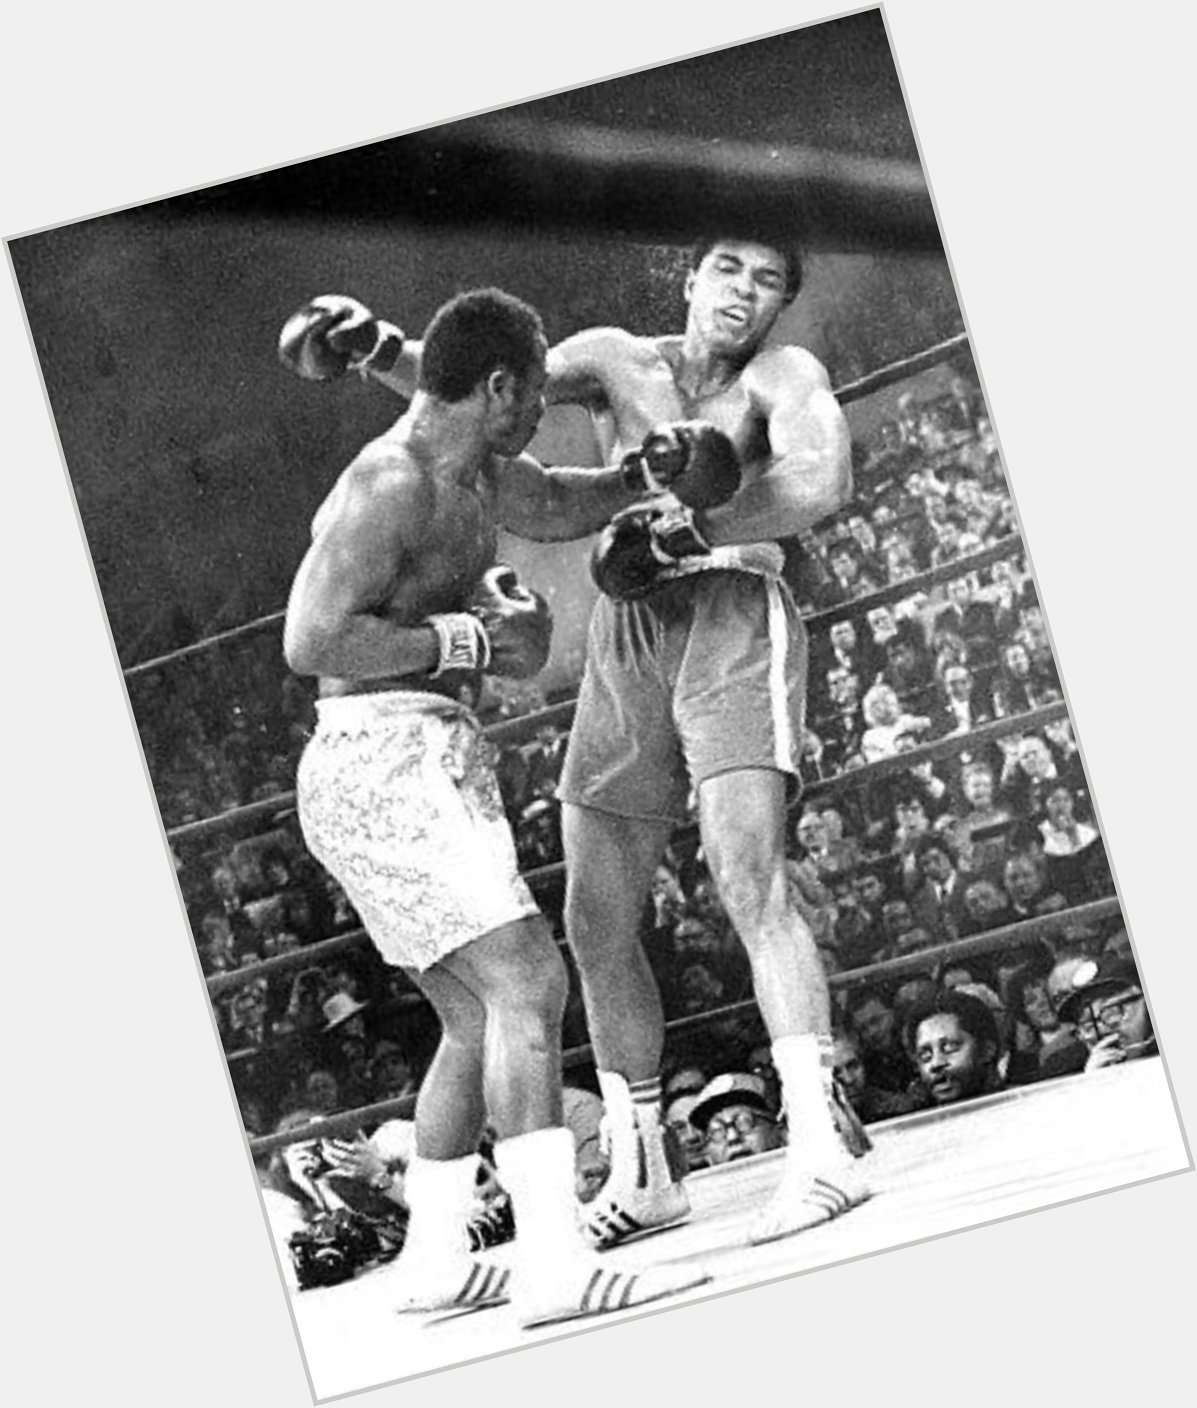 Happy birthday Champ
\"Smokin Joe\" Frazier 
Jan 11,1944-Nov 7,2011

First boxer to beat Muhammad Ali 